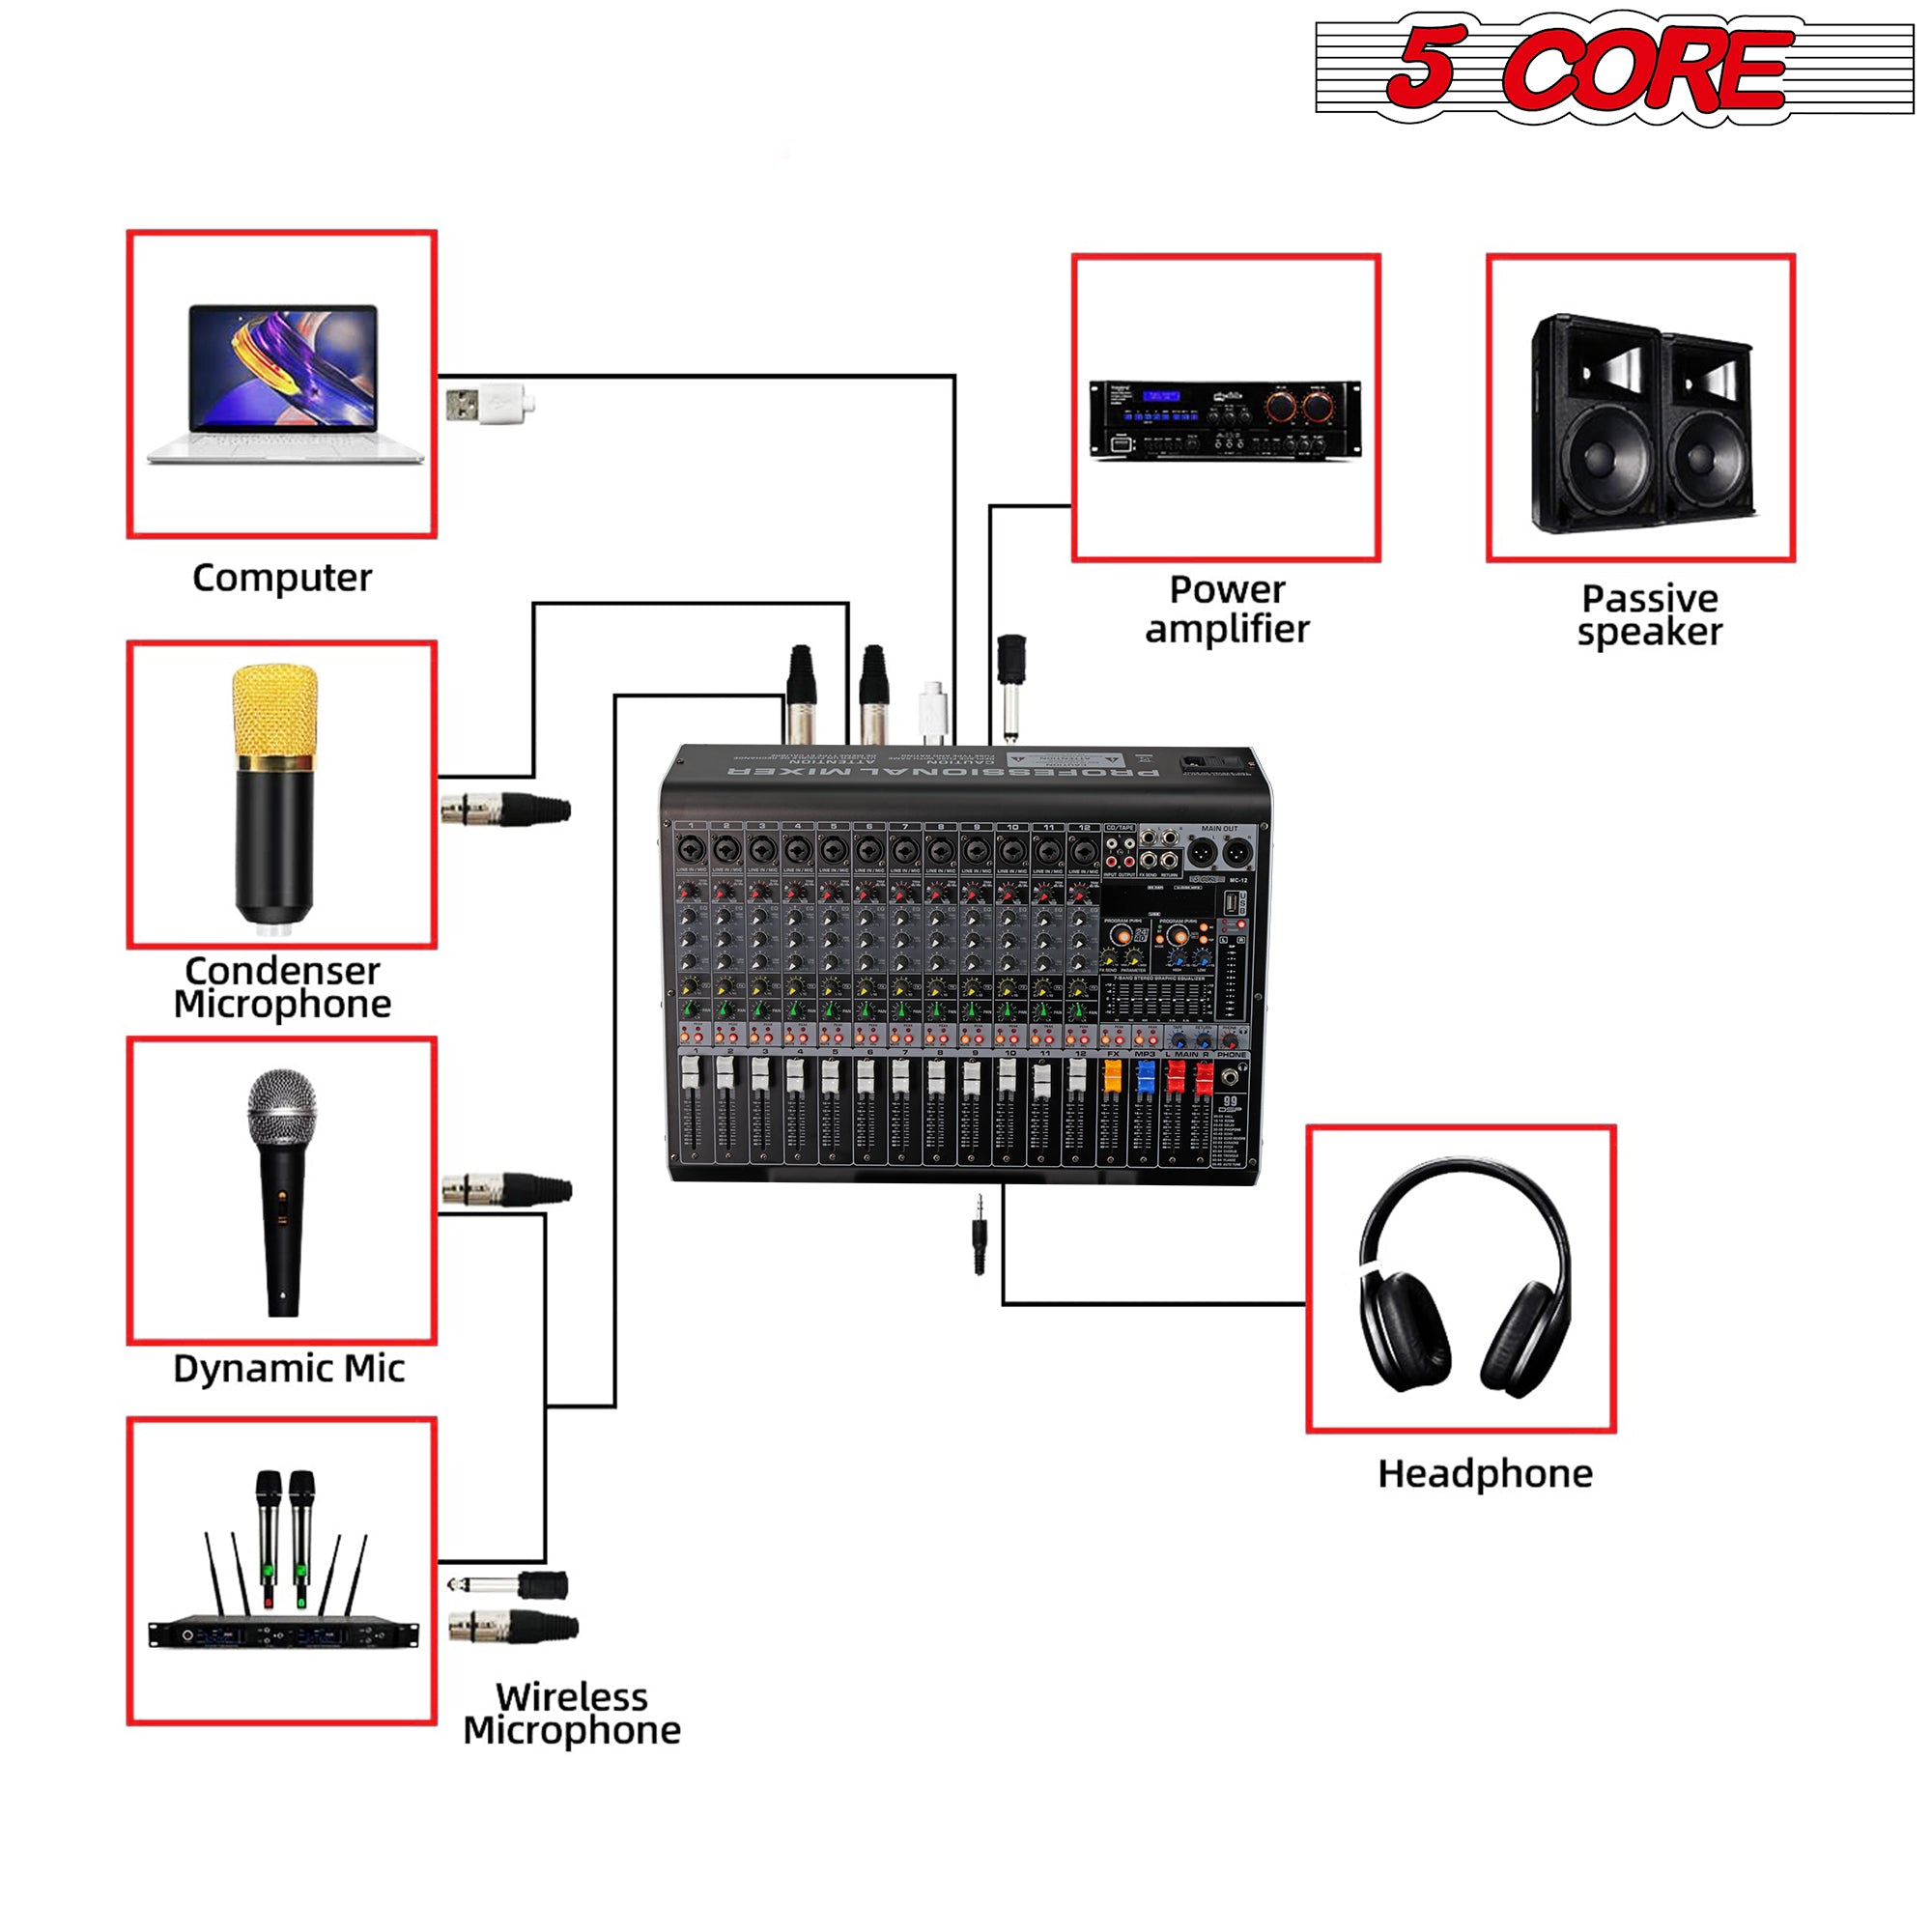 5Core Audio DJ Mixer 12 Channel Sound Board L Shape w Bluetooth  USB  99 DSP Effects 48V Phantom Power